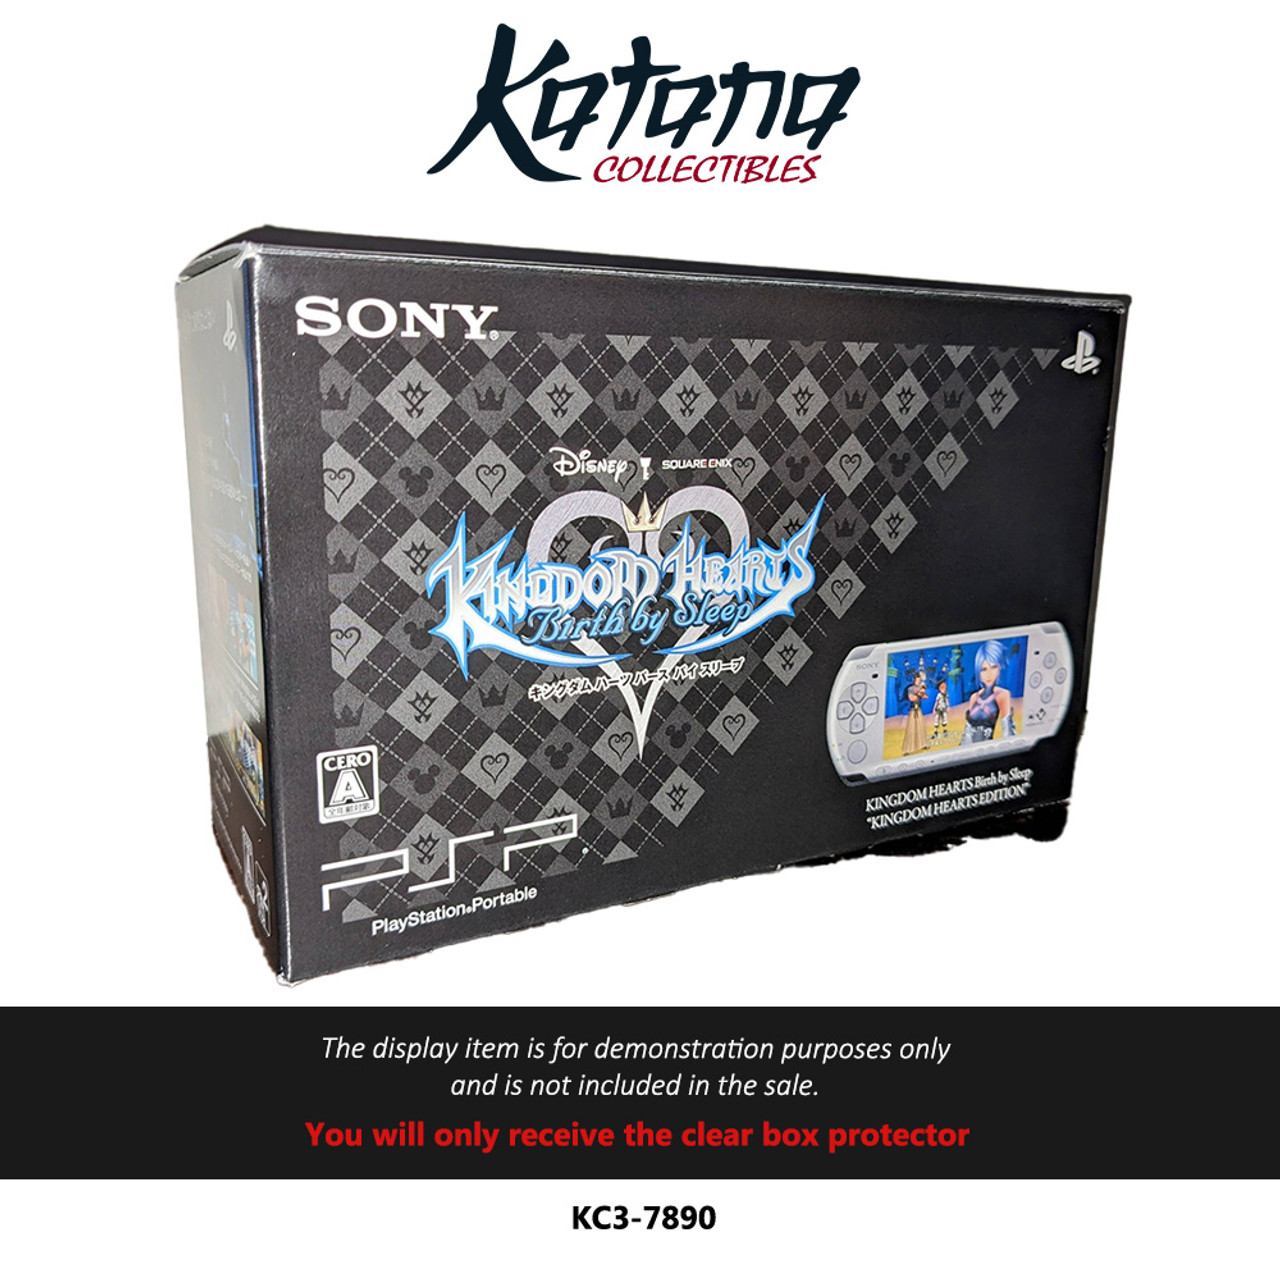 HOT本物保証PSP-3000 キングダムハーツ バース バイ スリープ “KINGDOM HEARTS EDITION” PSP PSP1000シリーズ